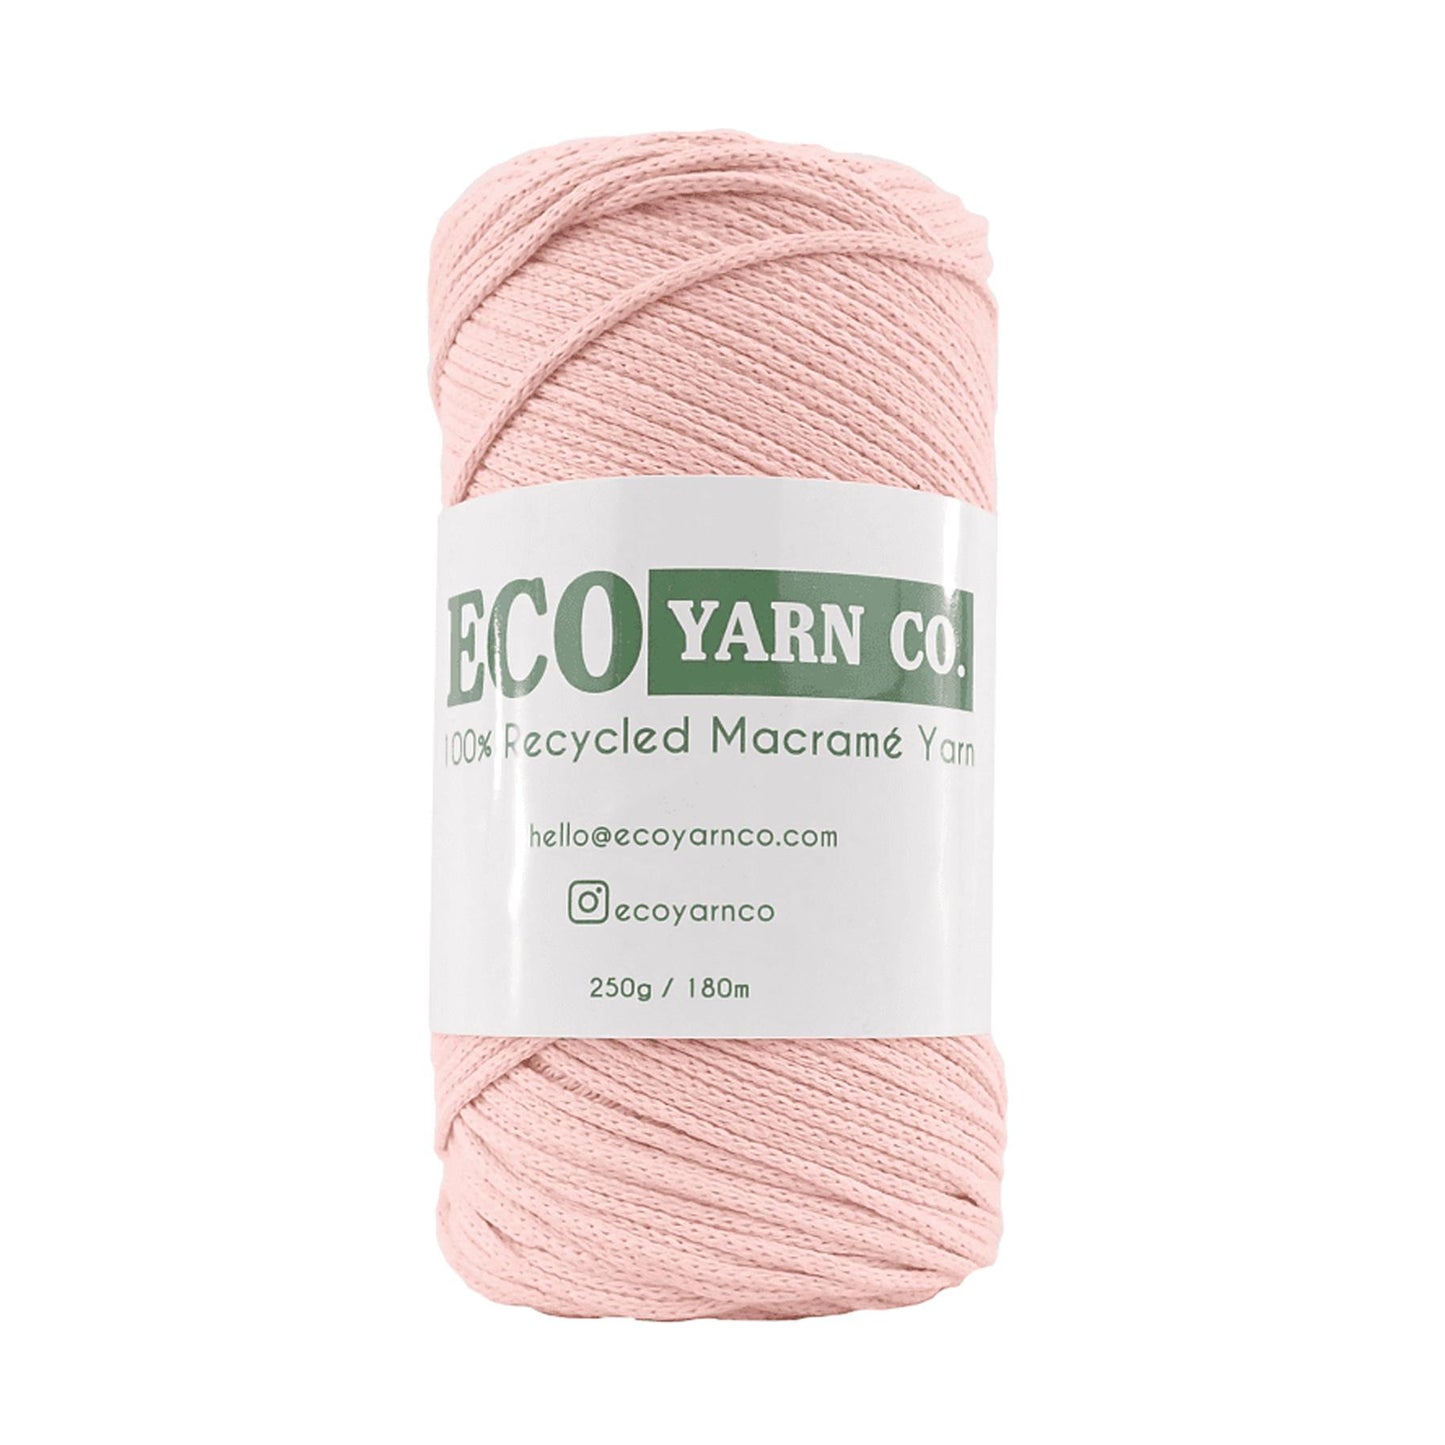 [Eco Yarn Co] Vintage Pink Cotton/Polyester Macrame Yarn - 180M, 250g